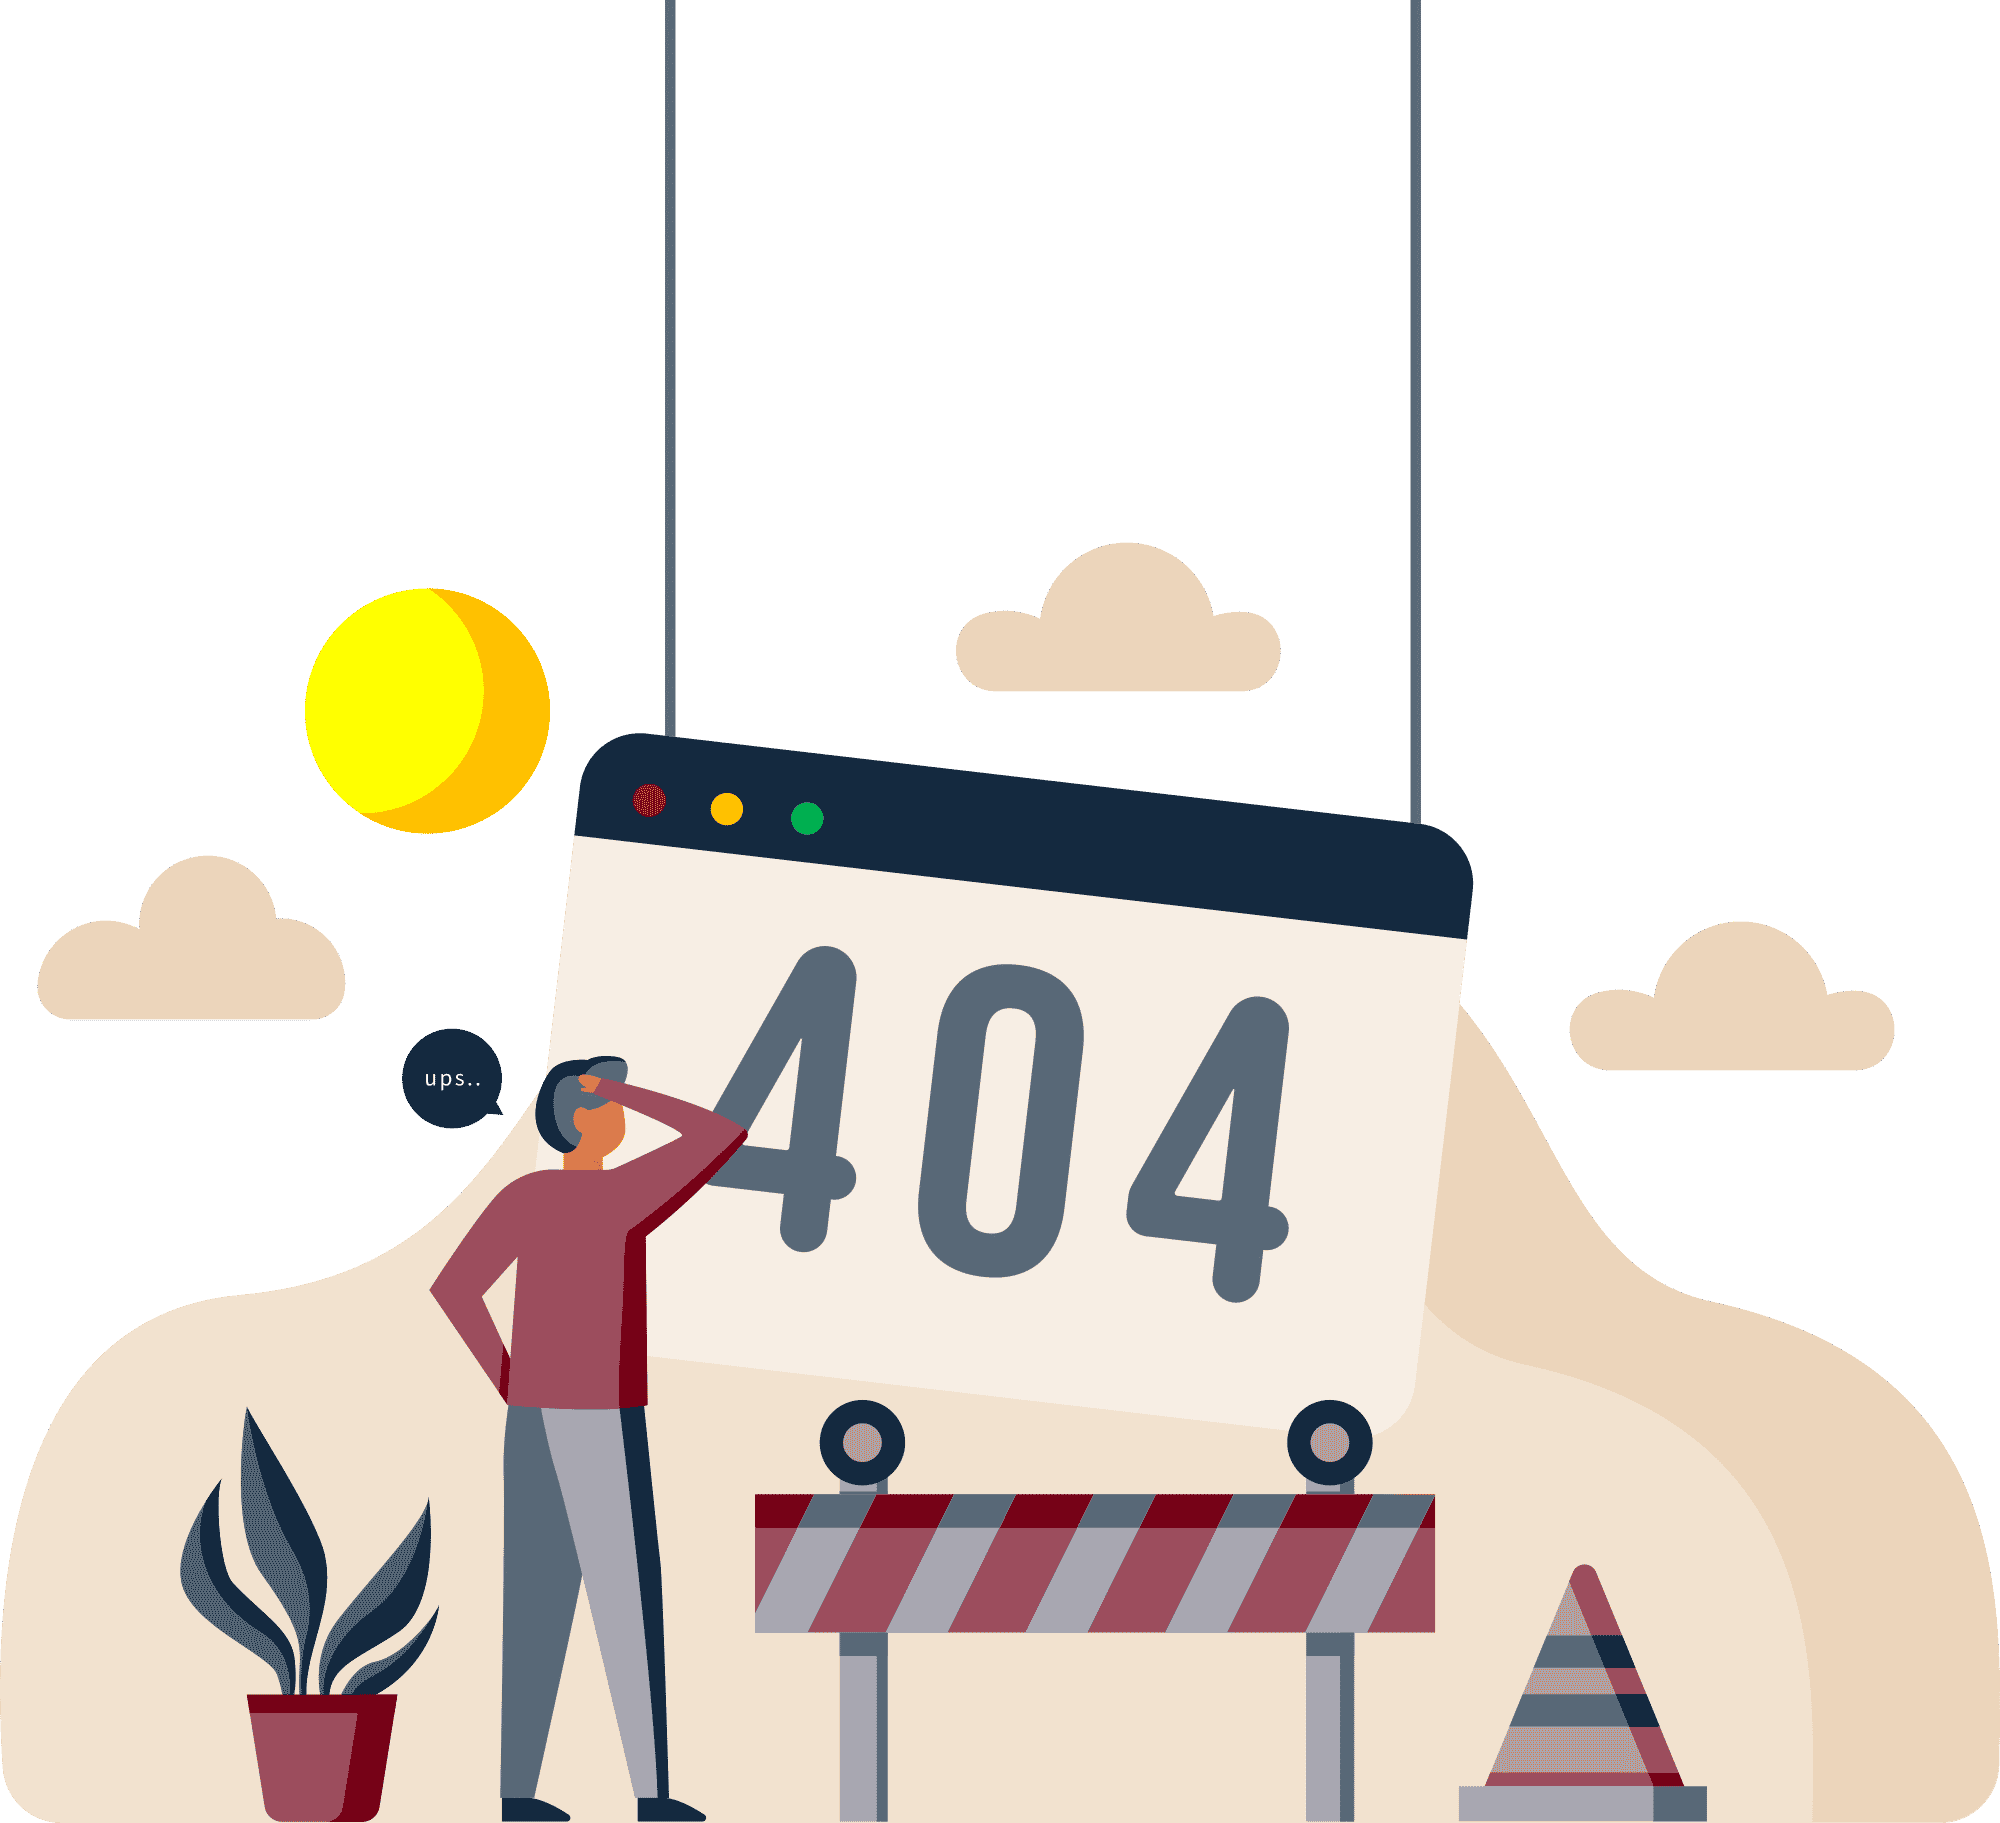 An error 404 illustration.